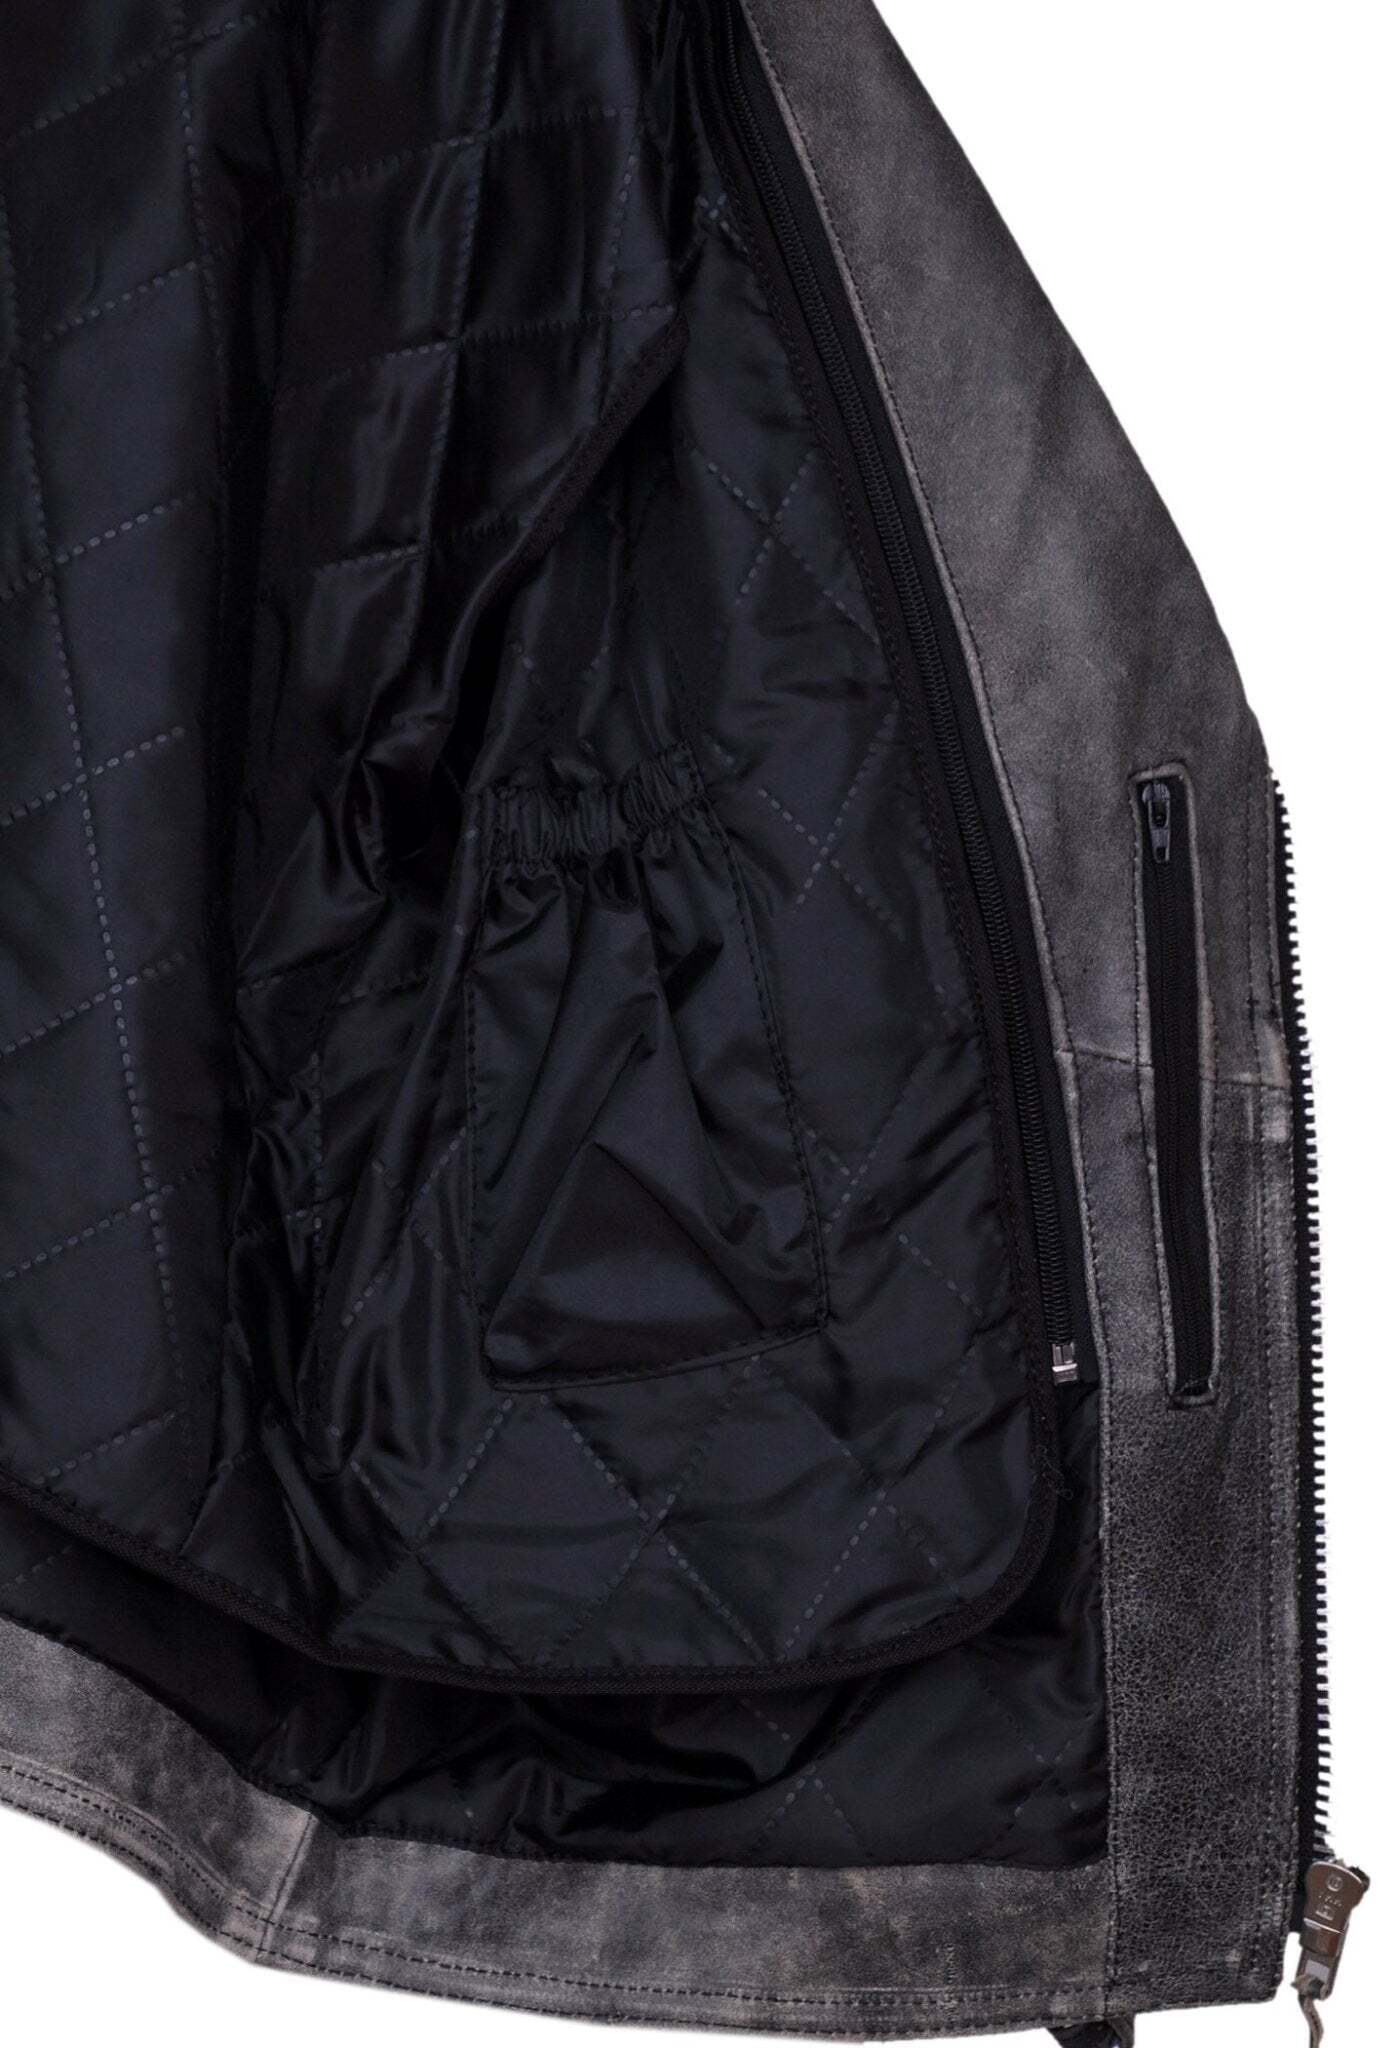 Marlon Brando Mens Stonewash Distressed Vintage Leather Jacket